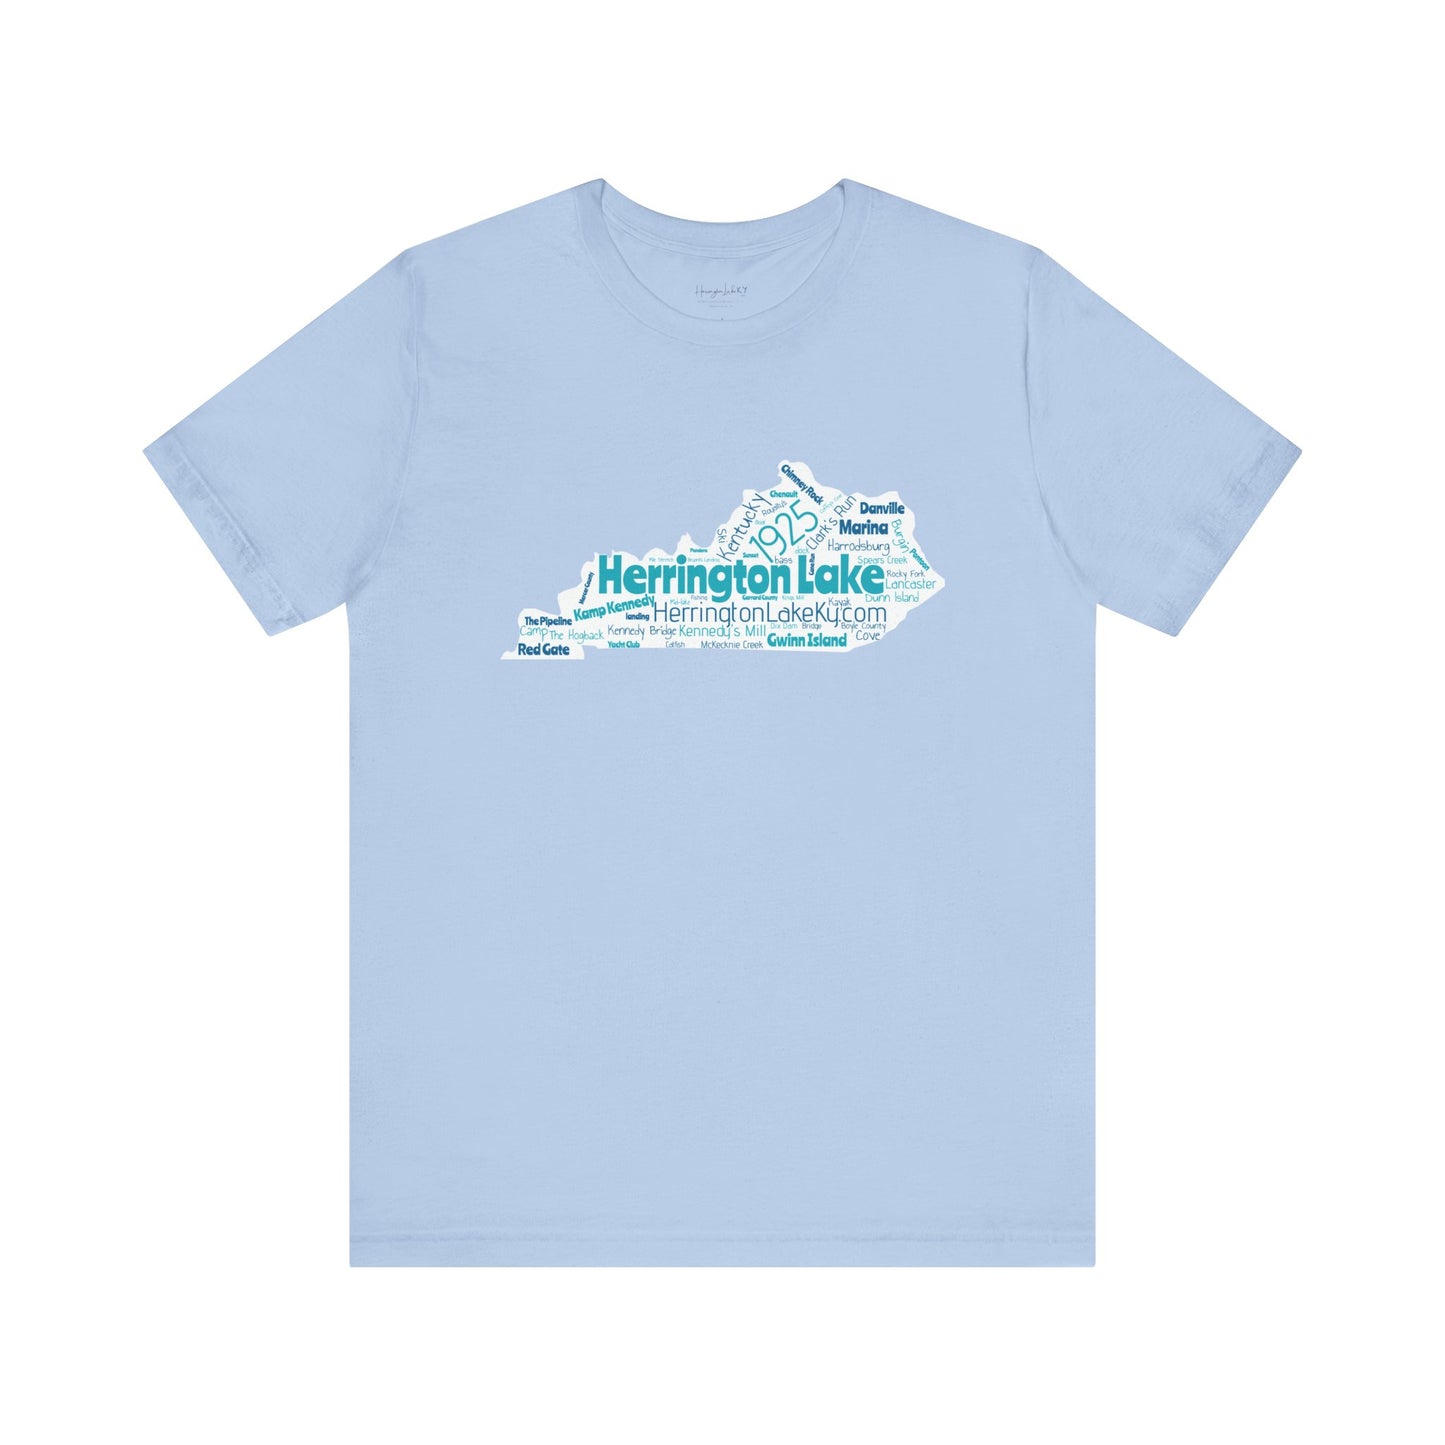 The Herrington Lake Kentucky WordCloud Jersey Knit Cotton T-Shirt